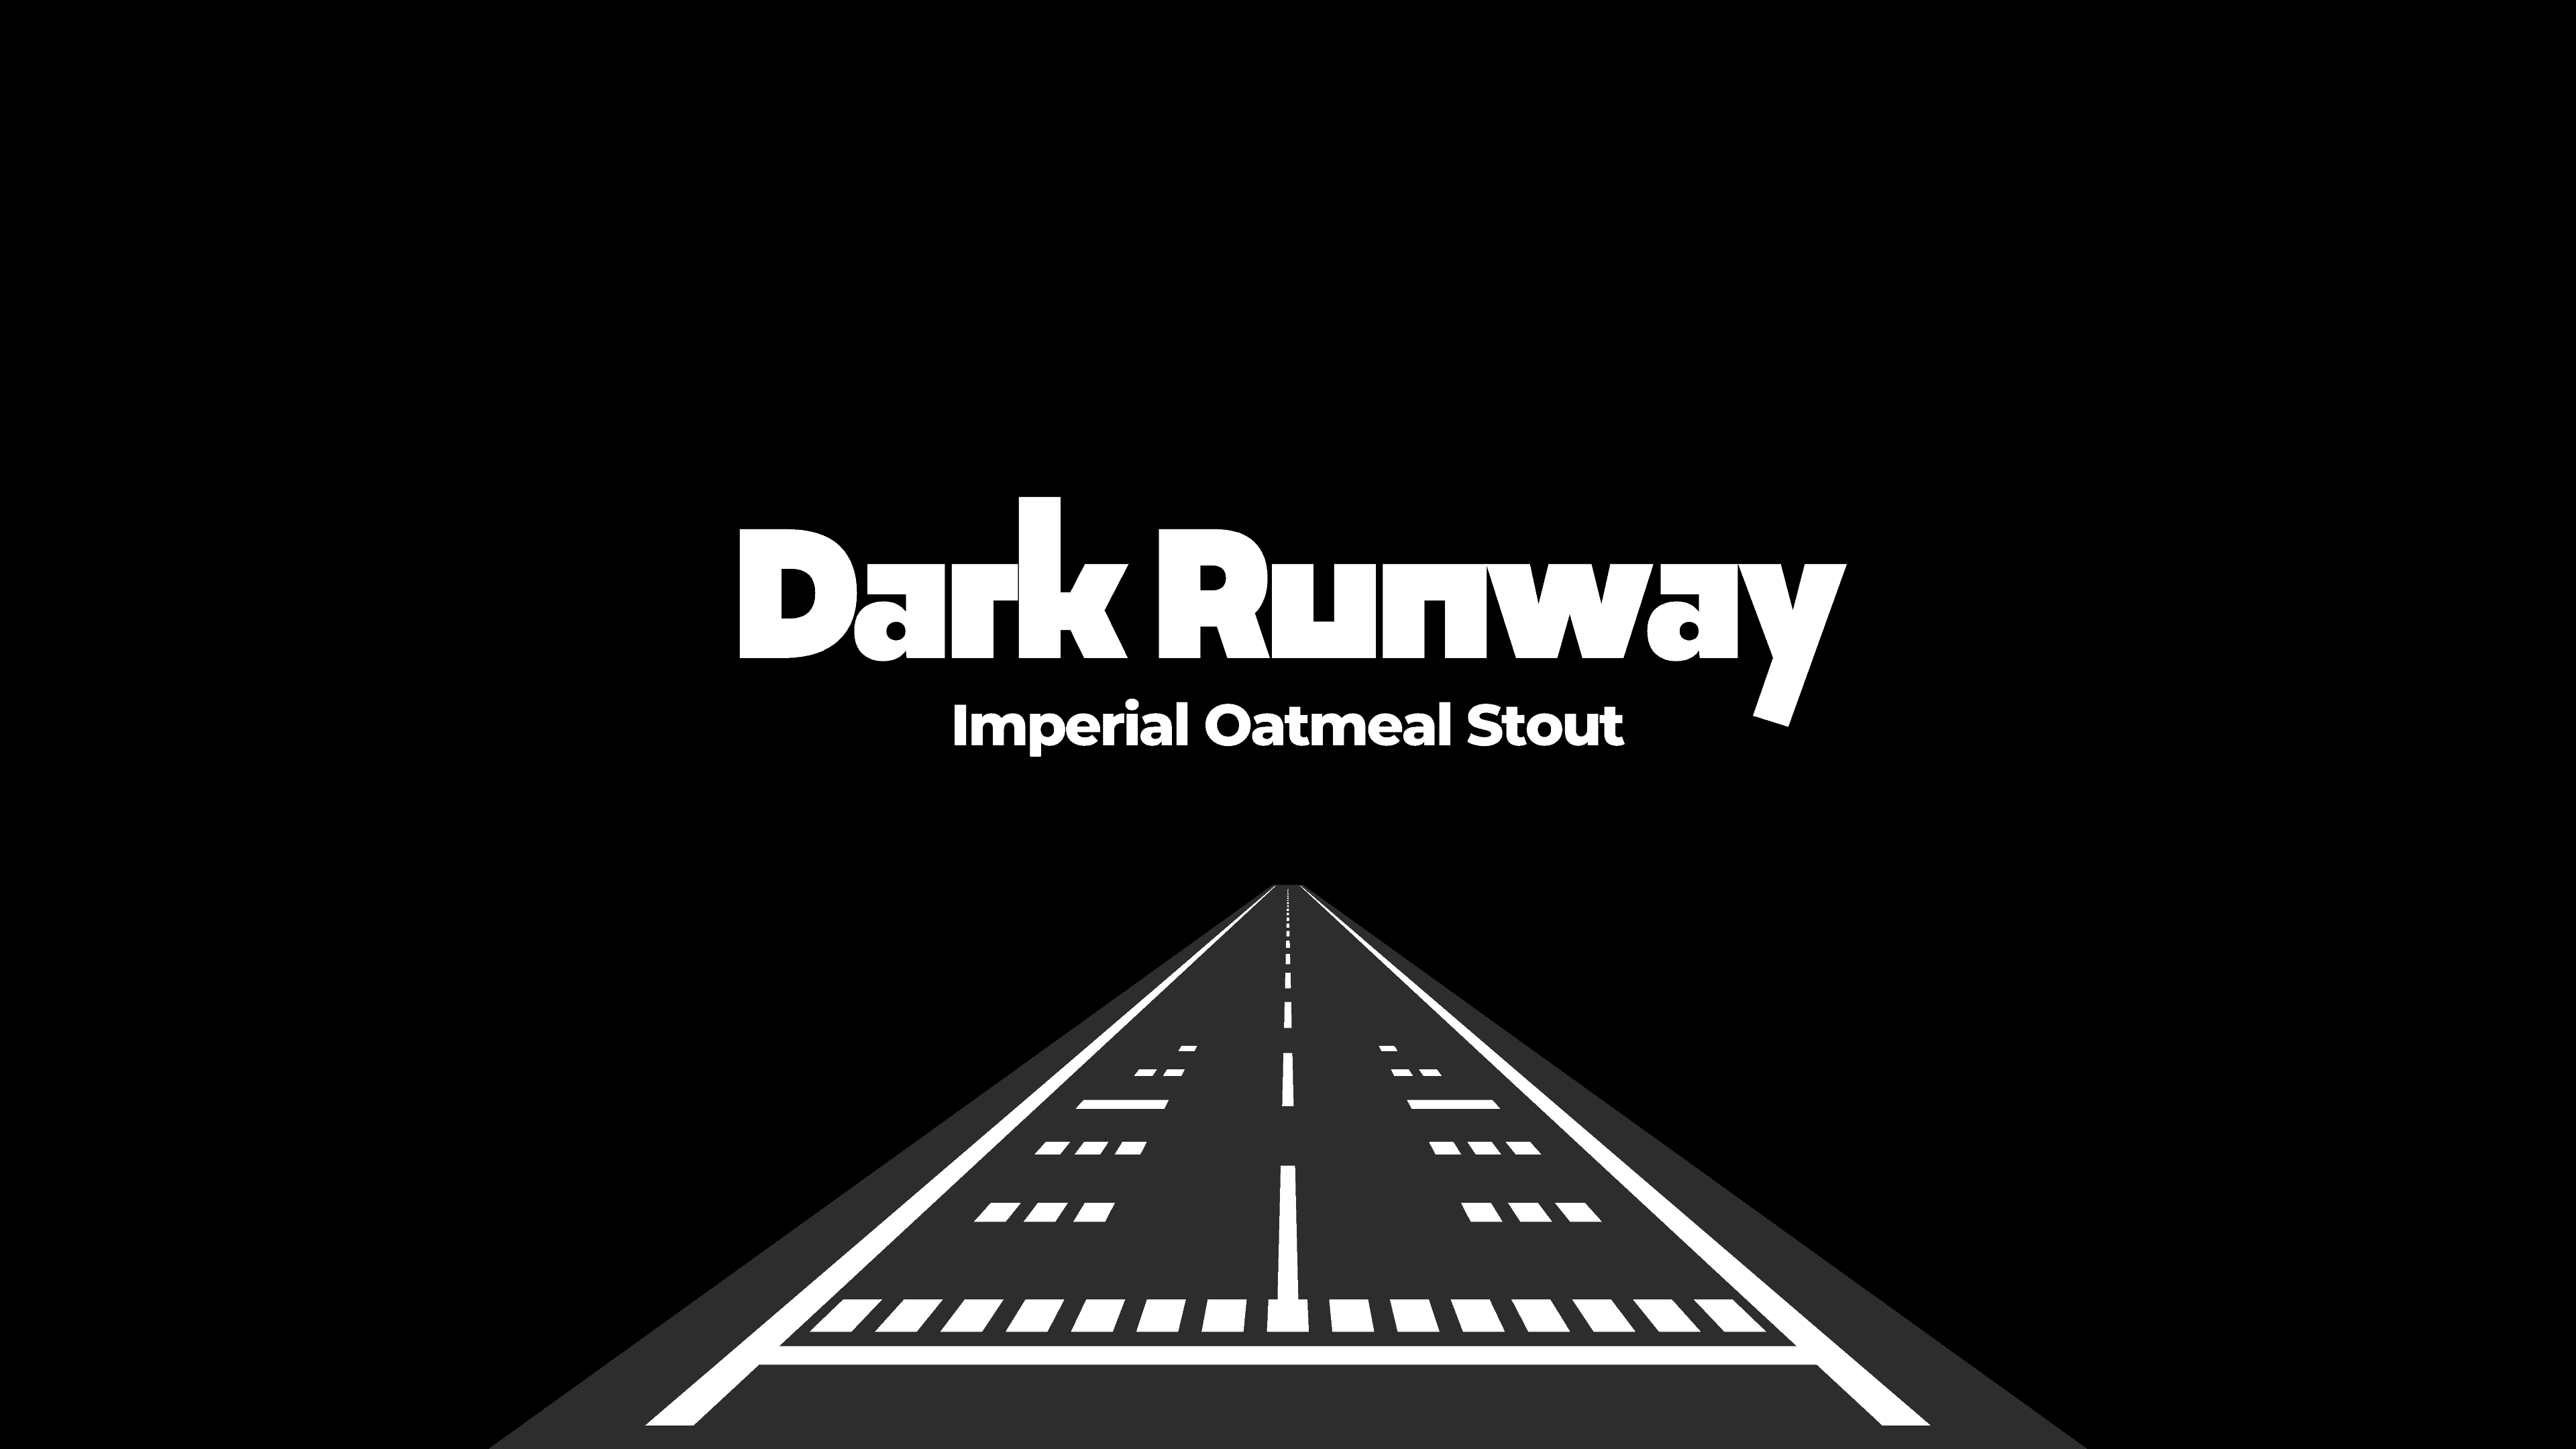 Dark Runway Imperial Oatmeal Stout Release